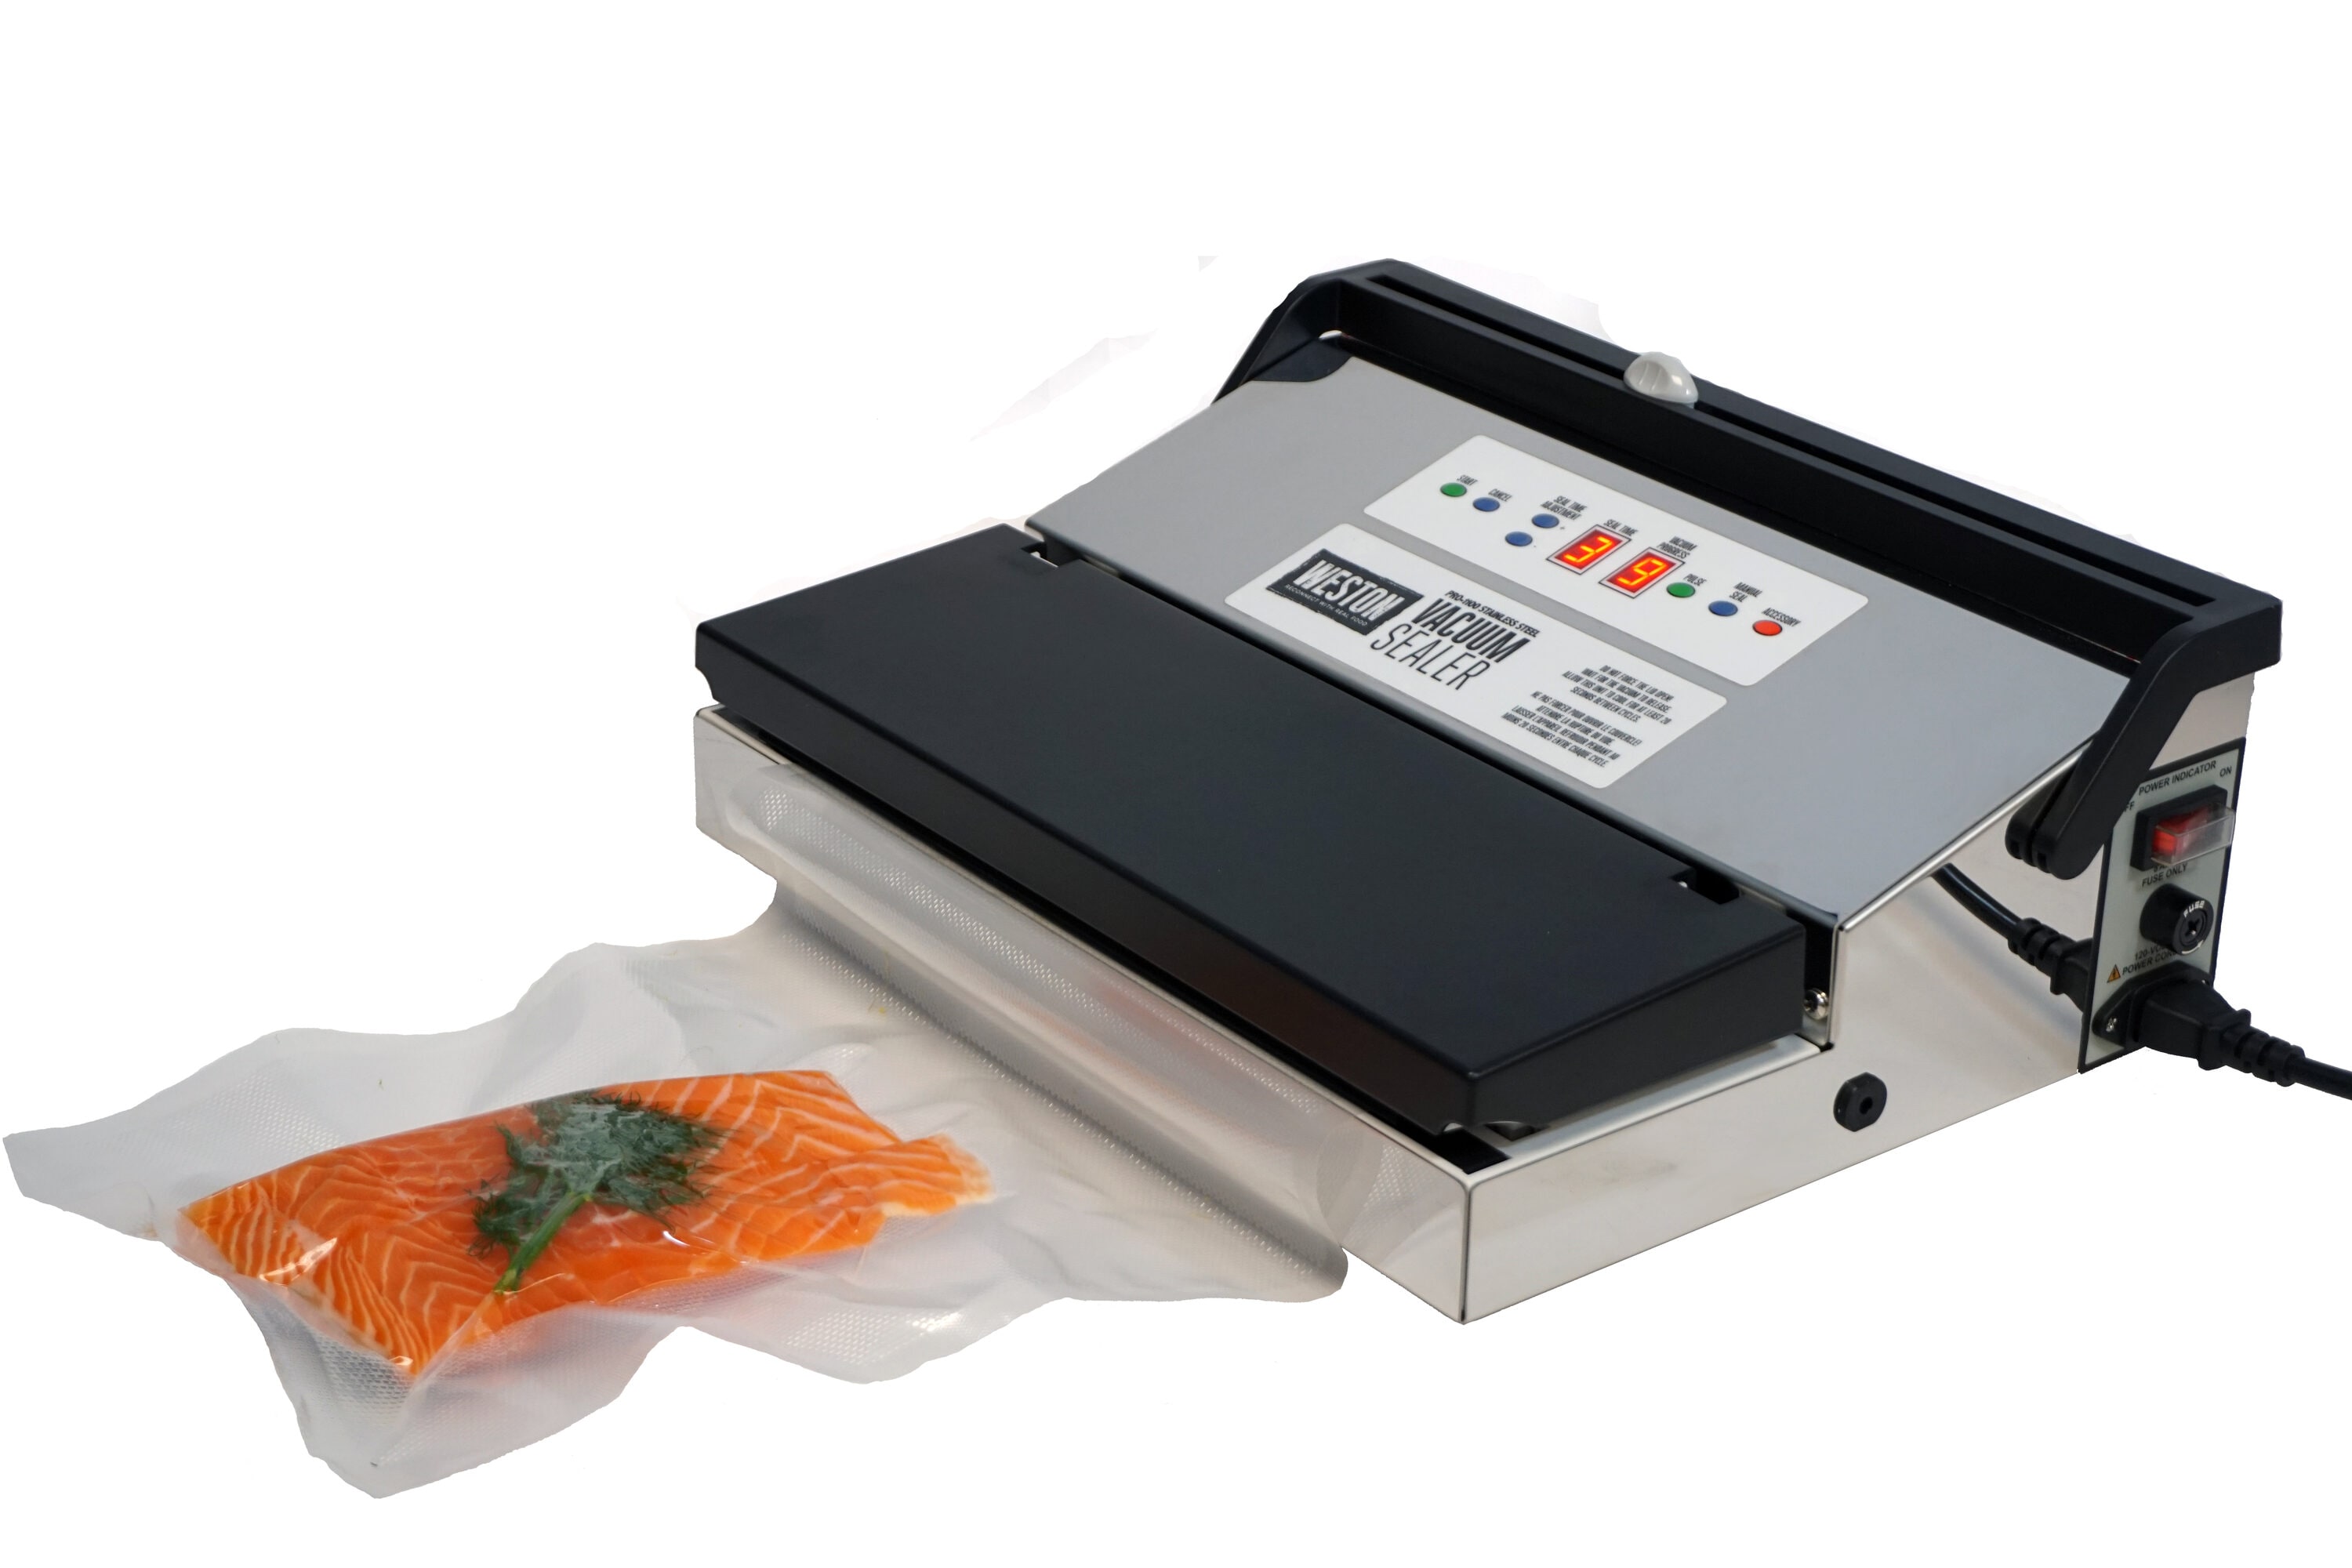 Nesco Black/Silver Food Vacuum Sealer with Digital Scale - Ace Hardware